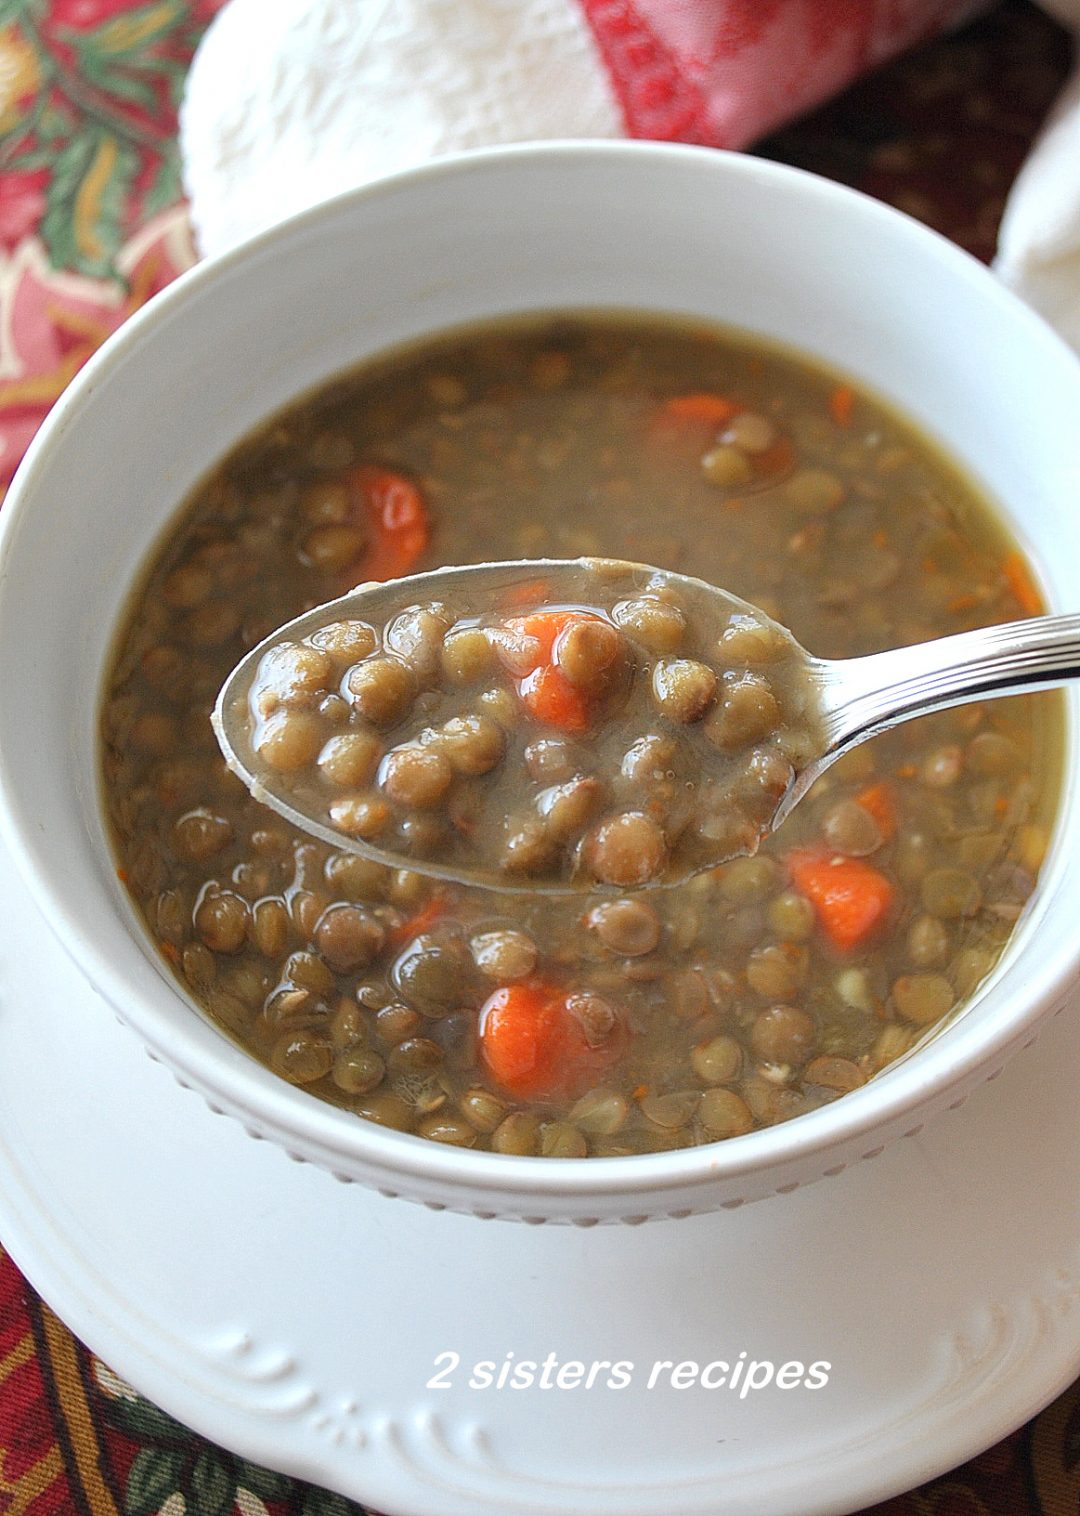 Low-Fat Lentil Soup with Veggies by 2sistersrecipes.com